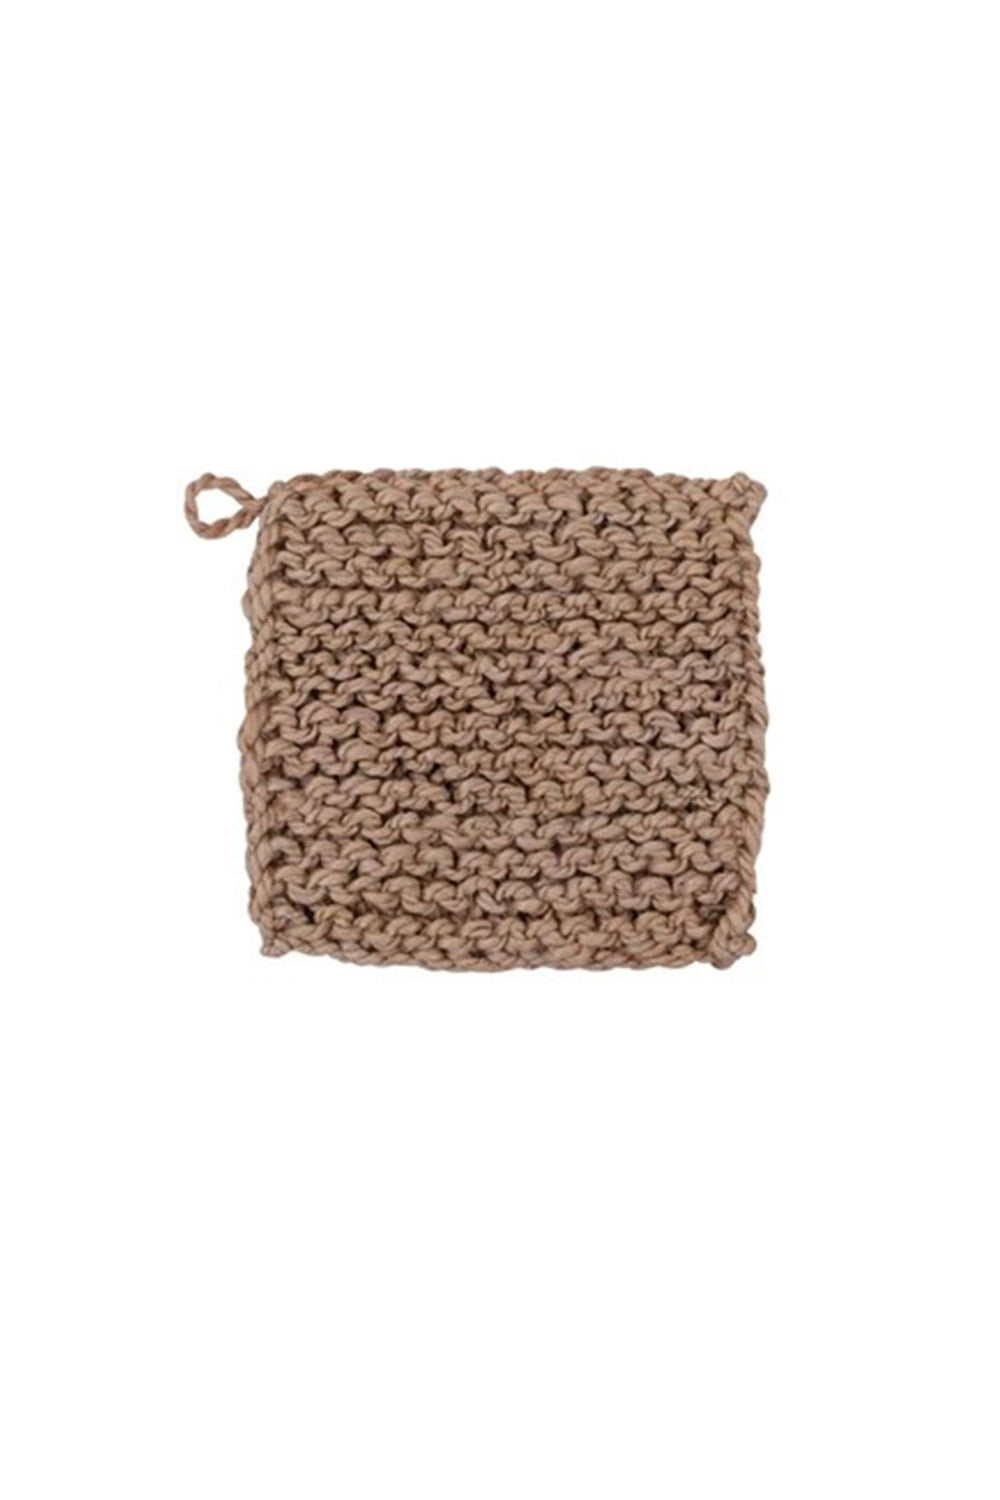 8 Square Jute Crocheted Pot Holder, Natural